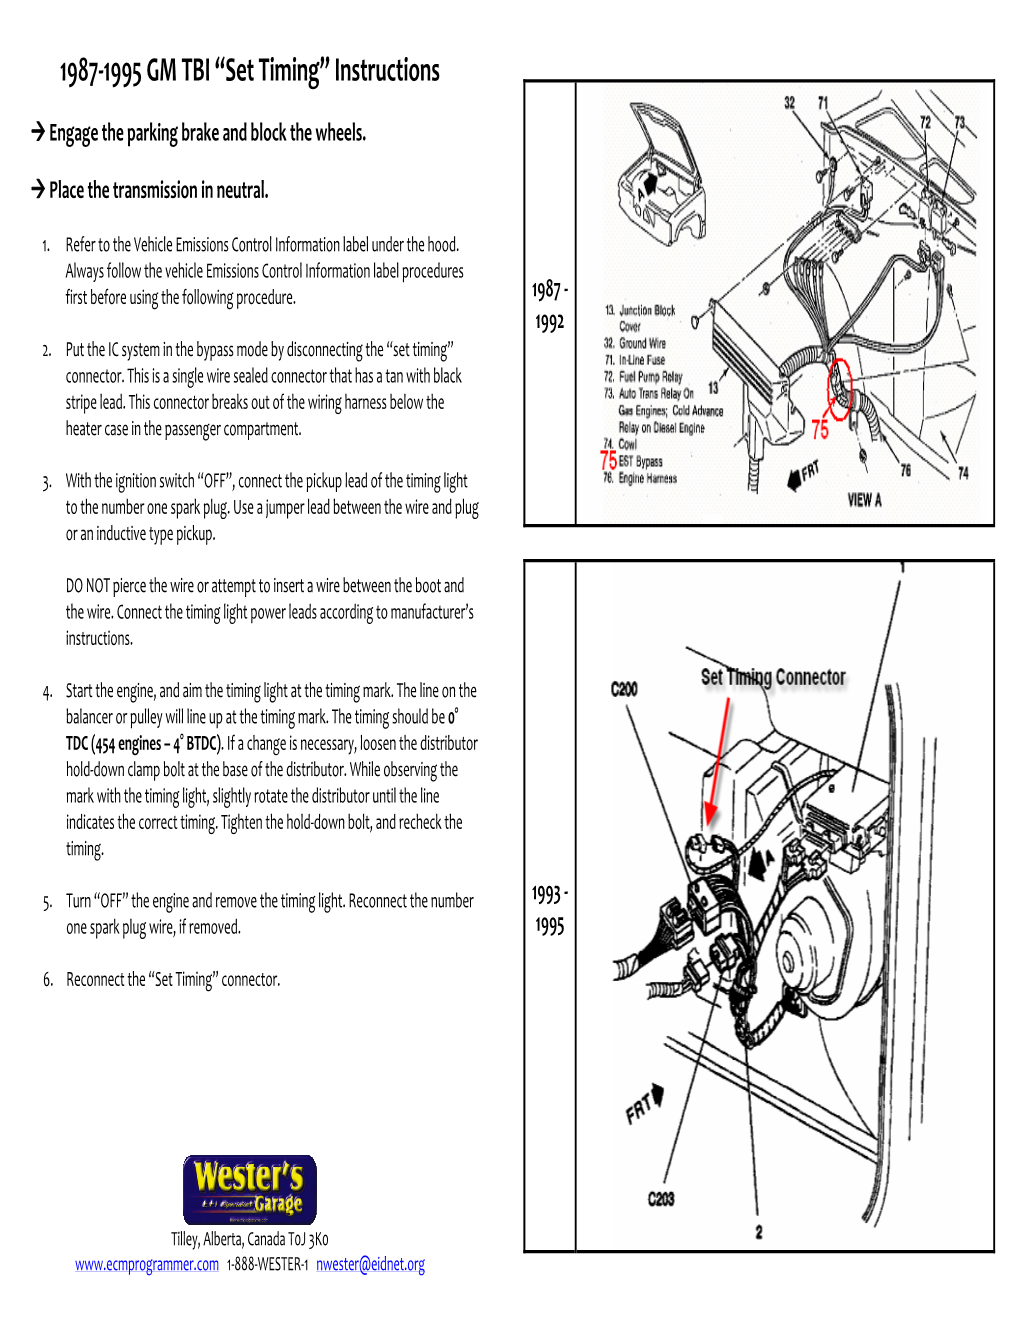 1987-1995 GM TBI “Set Timing” Instructions